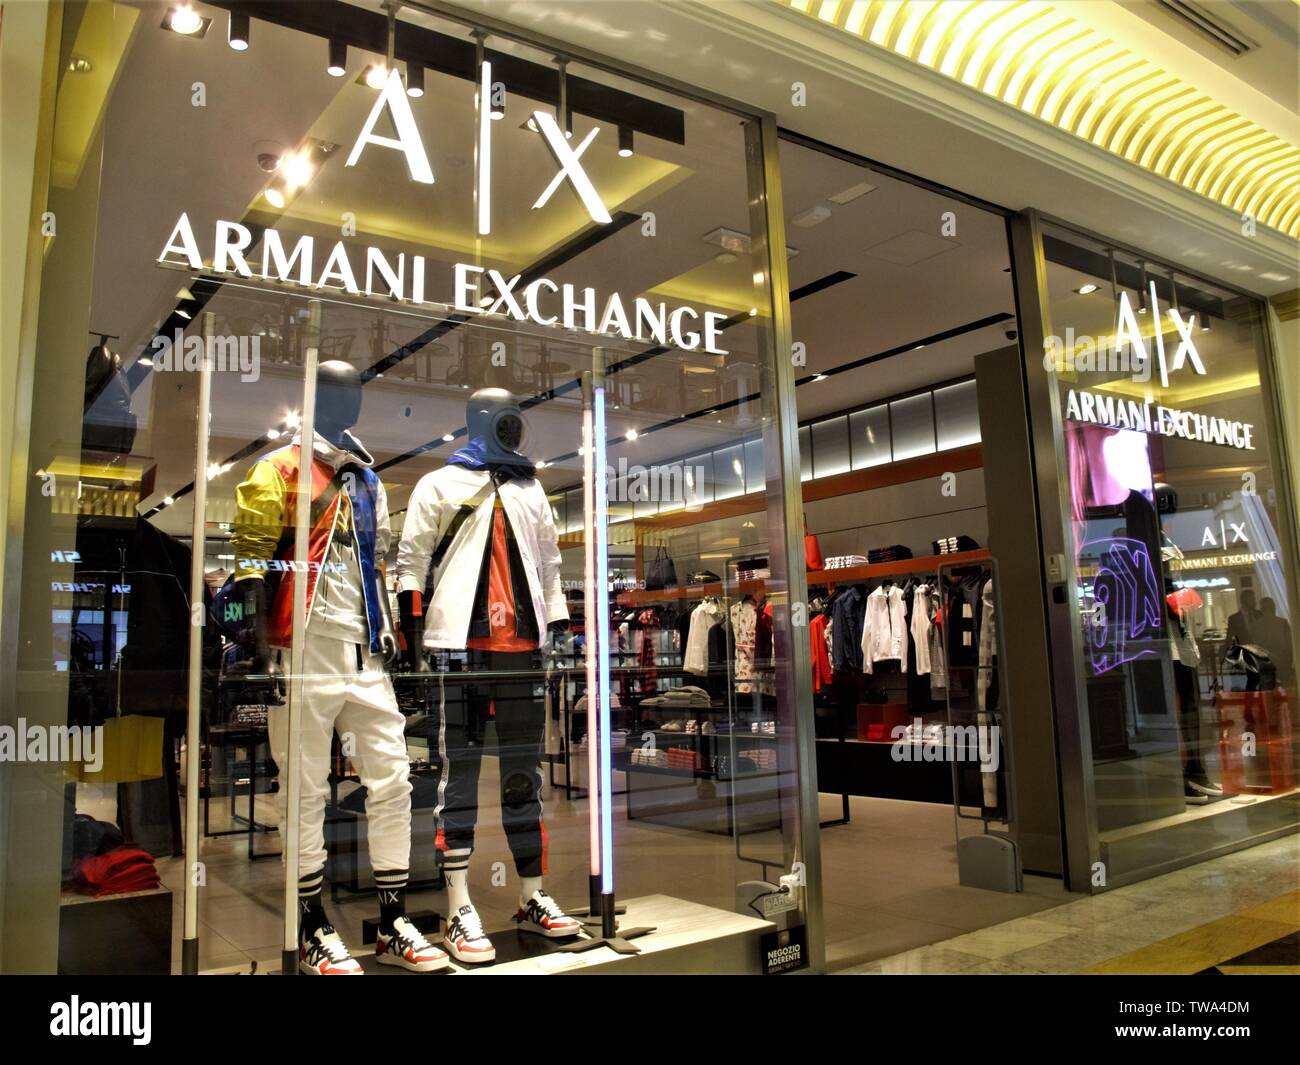 armani exchange galleria mall - 53% OFF 